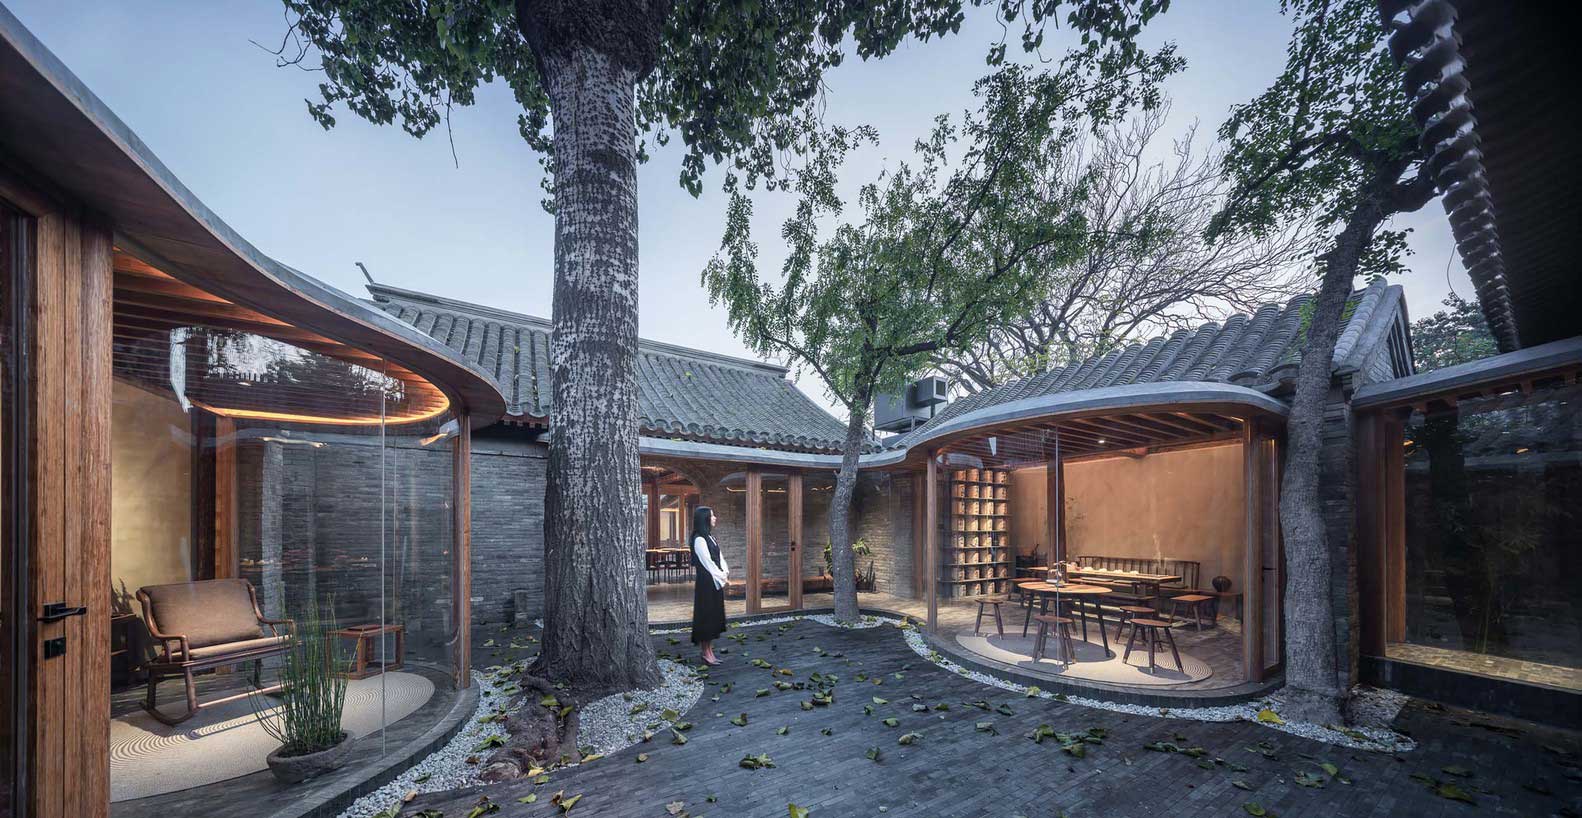 siheyuan
courtyard home
